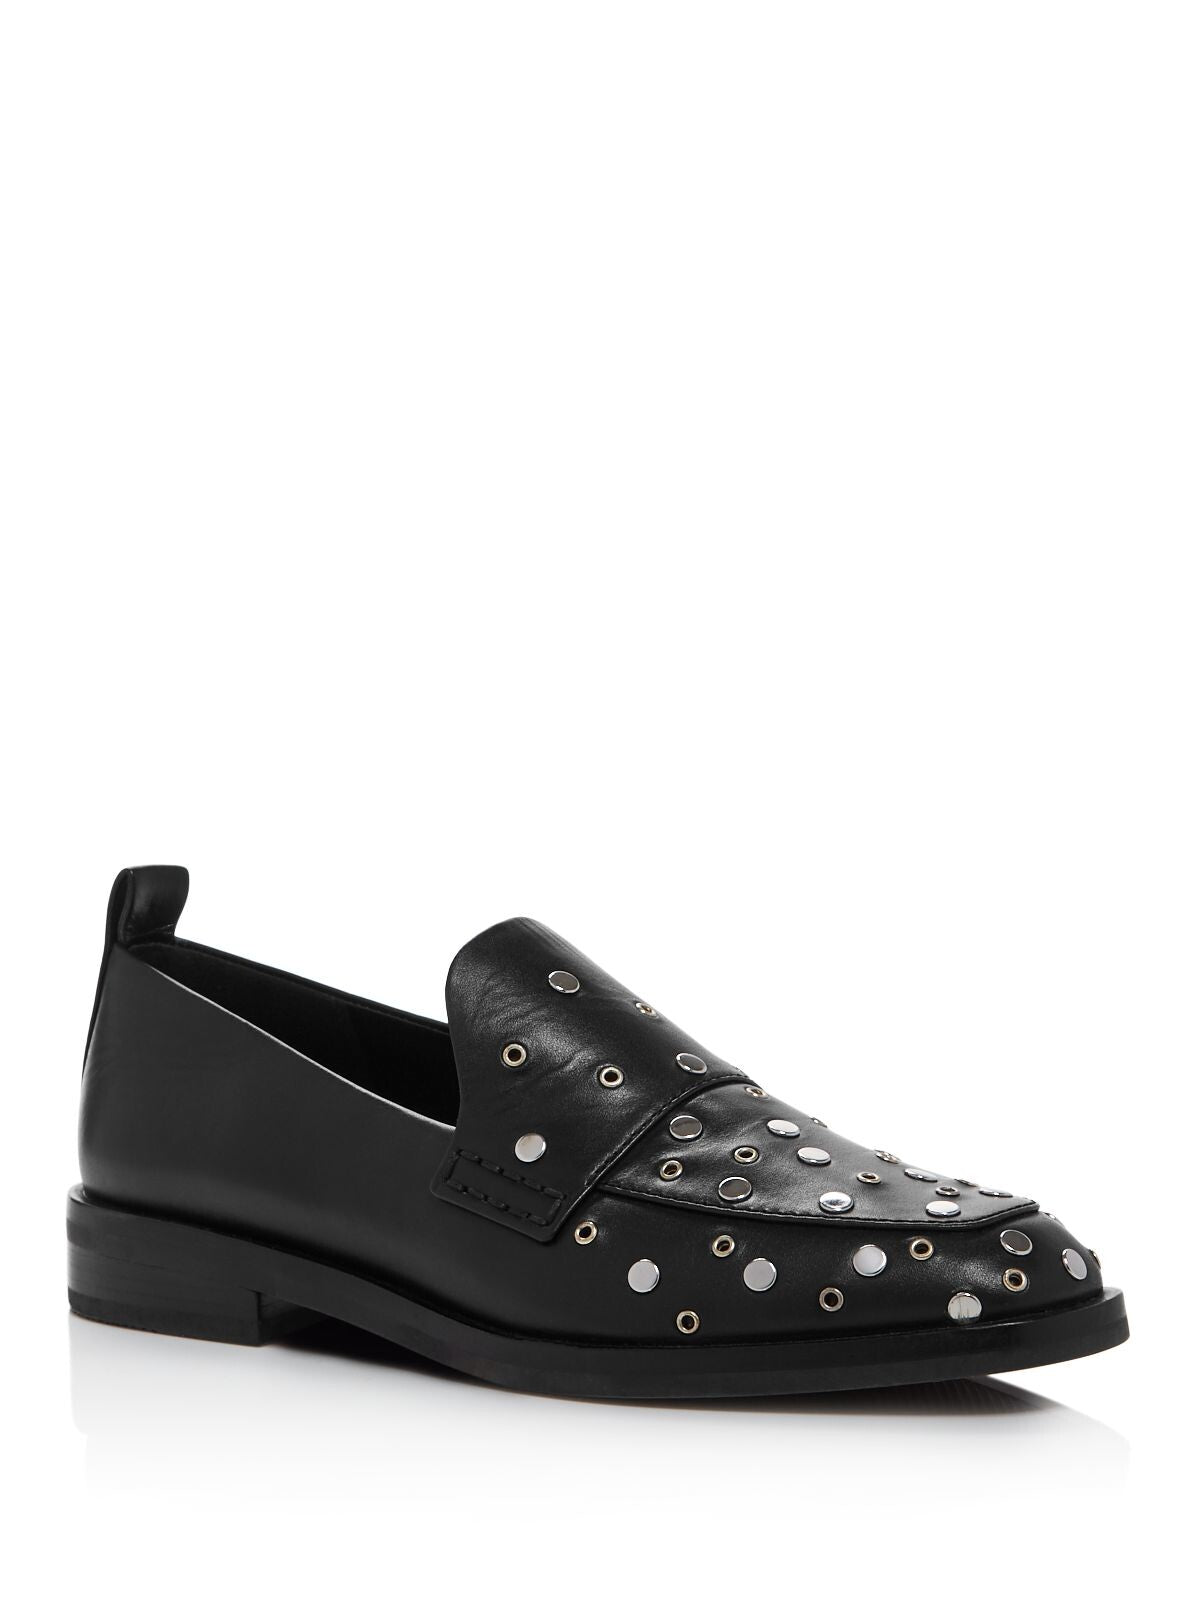 3.1 PHILLIP LIM Womens Black Studded Padded Alexa Square Toe Block Heel Slip On Leather Loafers Shoes 39